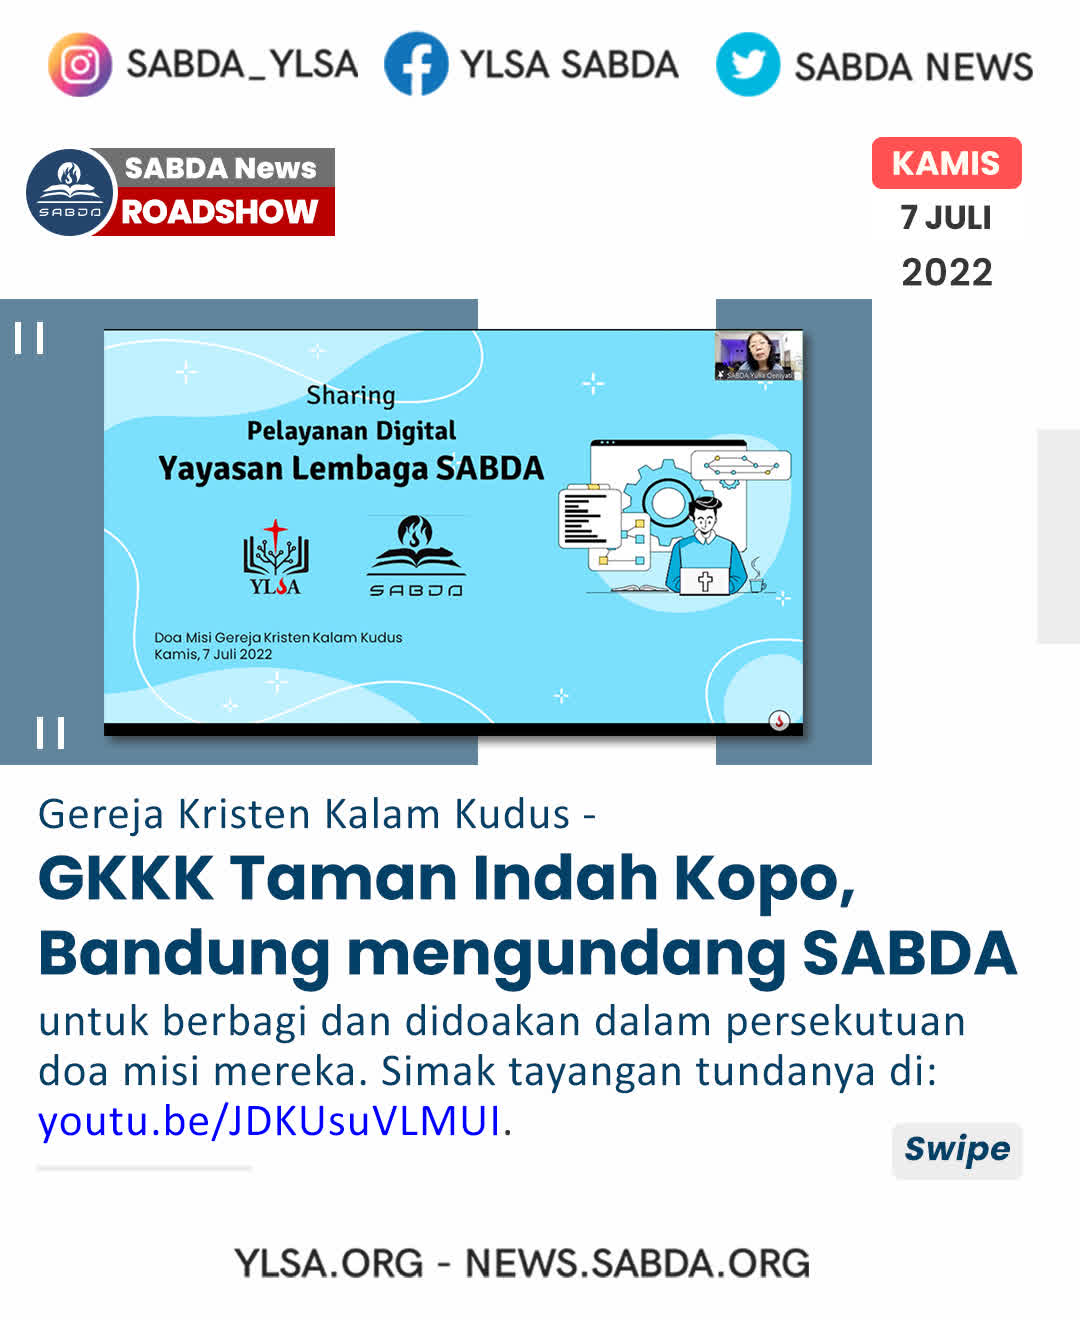 GKKK Taman Indah Kopo Bandung, Mengundang SABDA